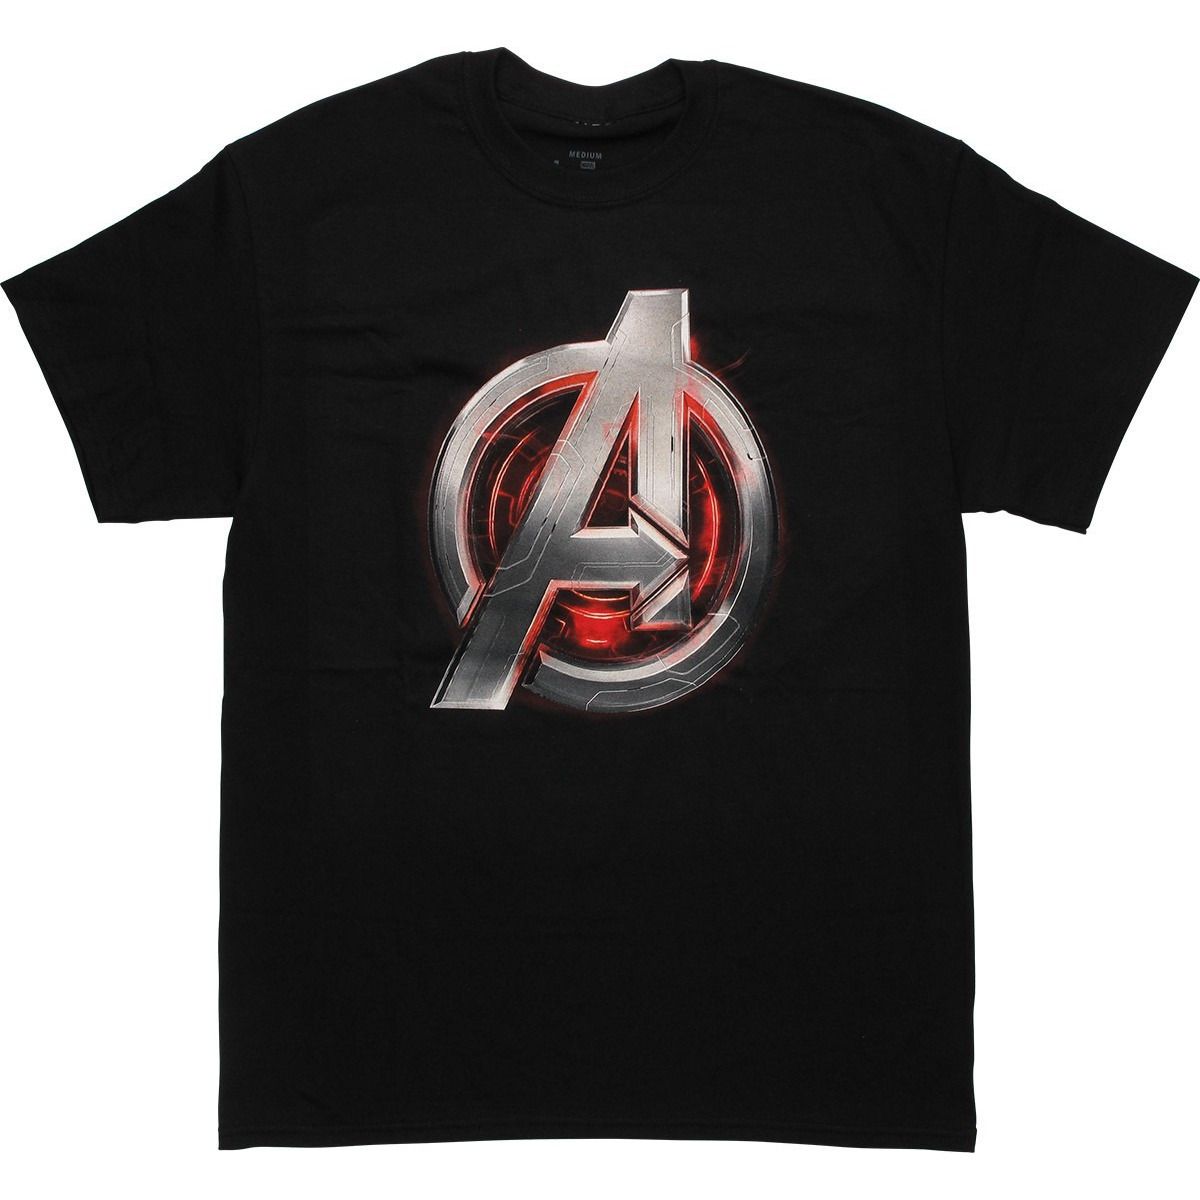  Avengers Age of Ultron Shirt Uncanny!